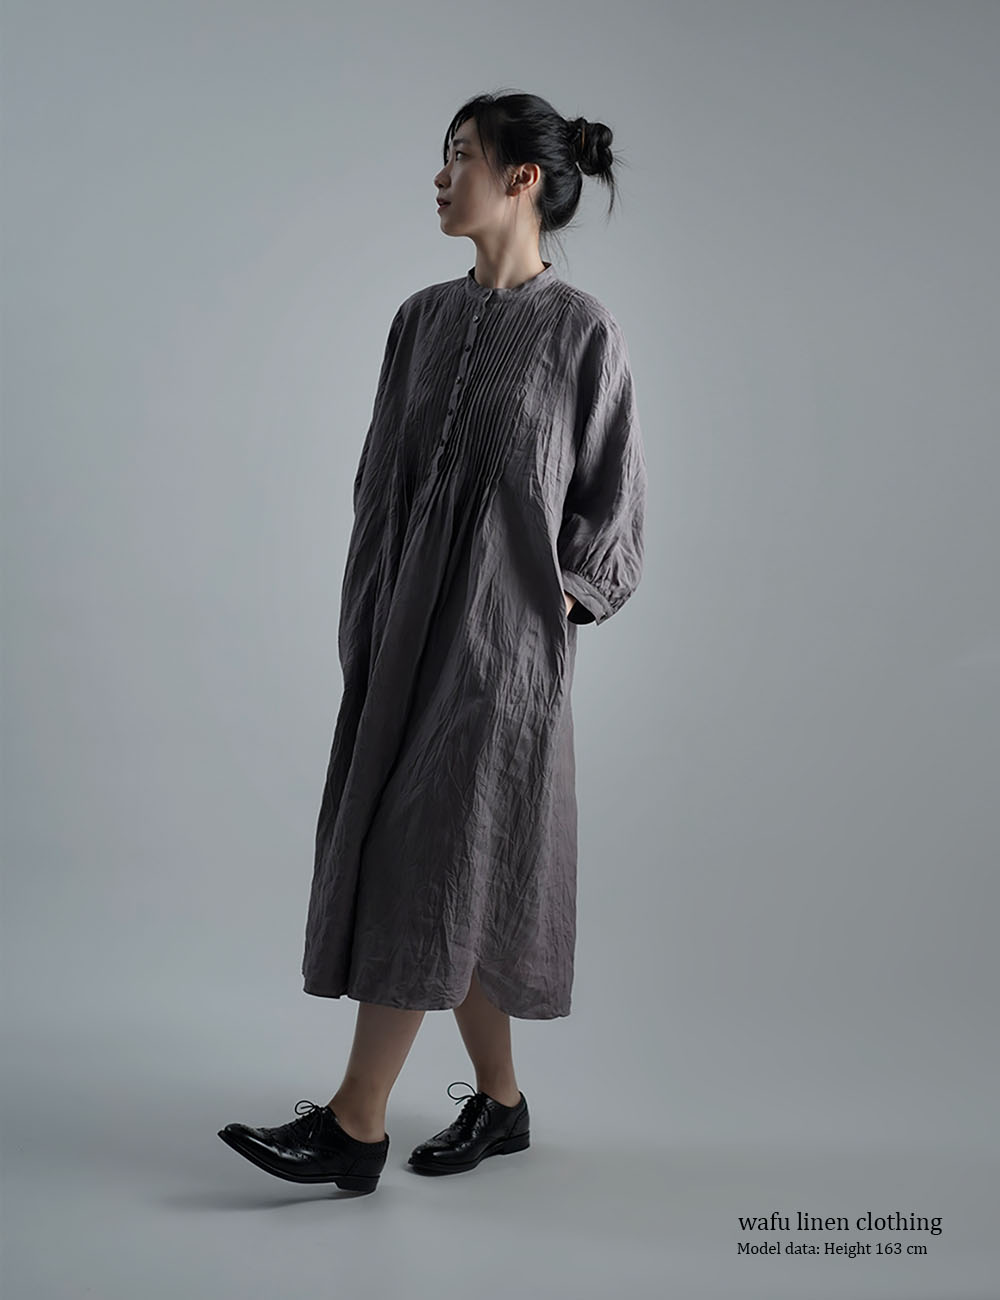 【wafu】Linen Dress　超高密度リネン ピンタックワンピース /茶鼠(ちゃねずみ) a006b-cnz1